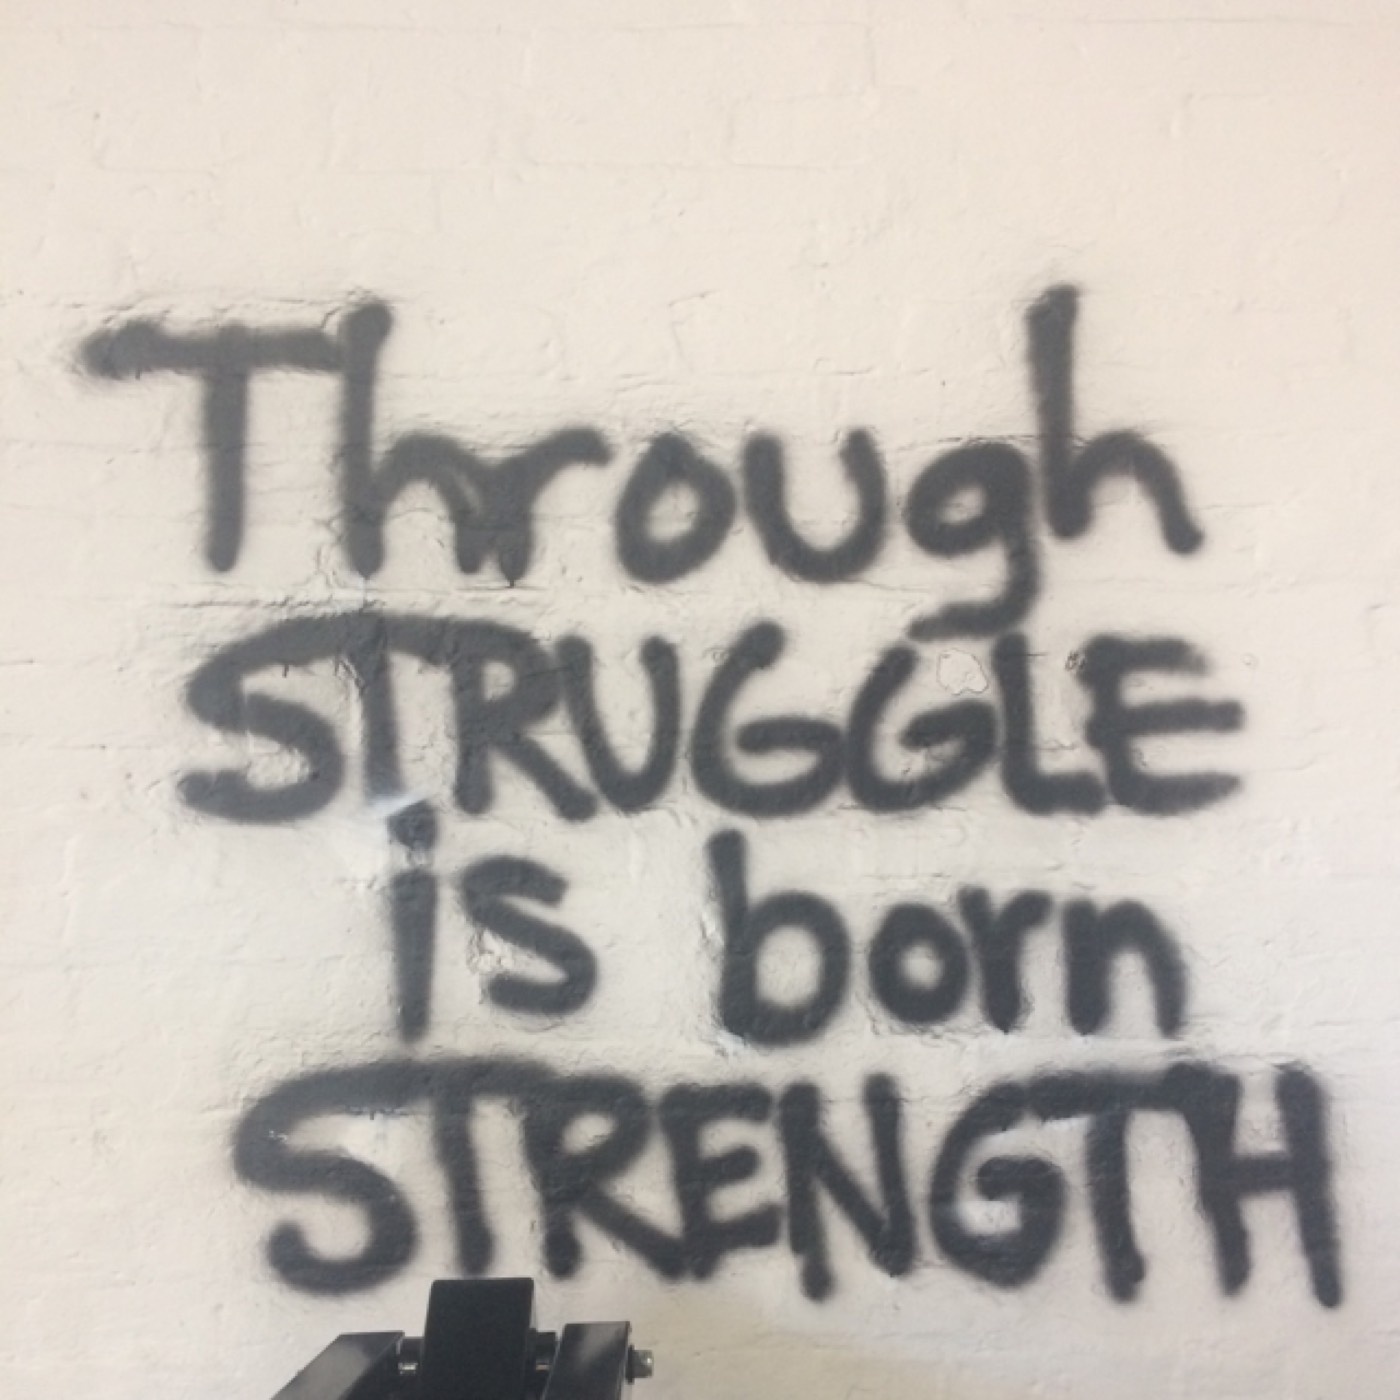 Episode 109- Mentally strong. Through struggle is born strength.